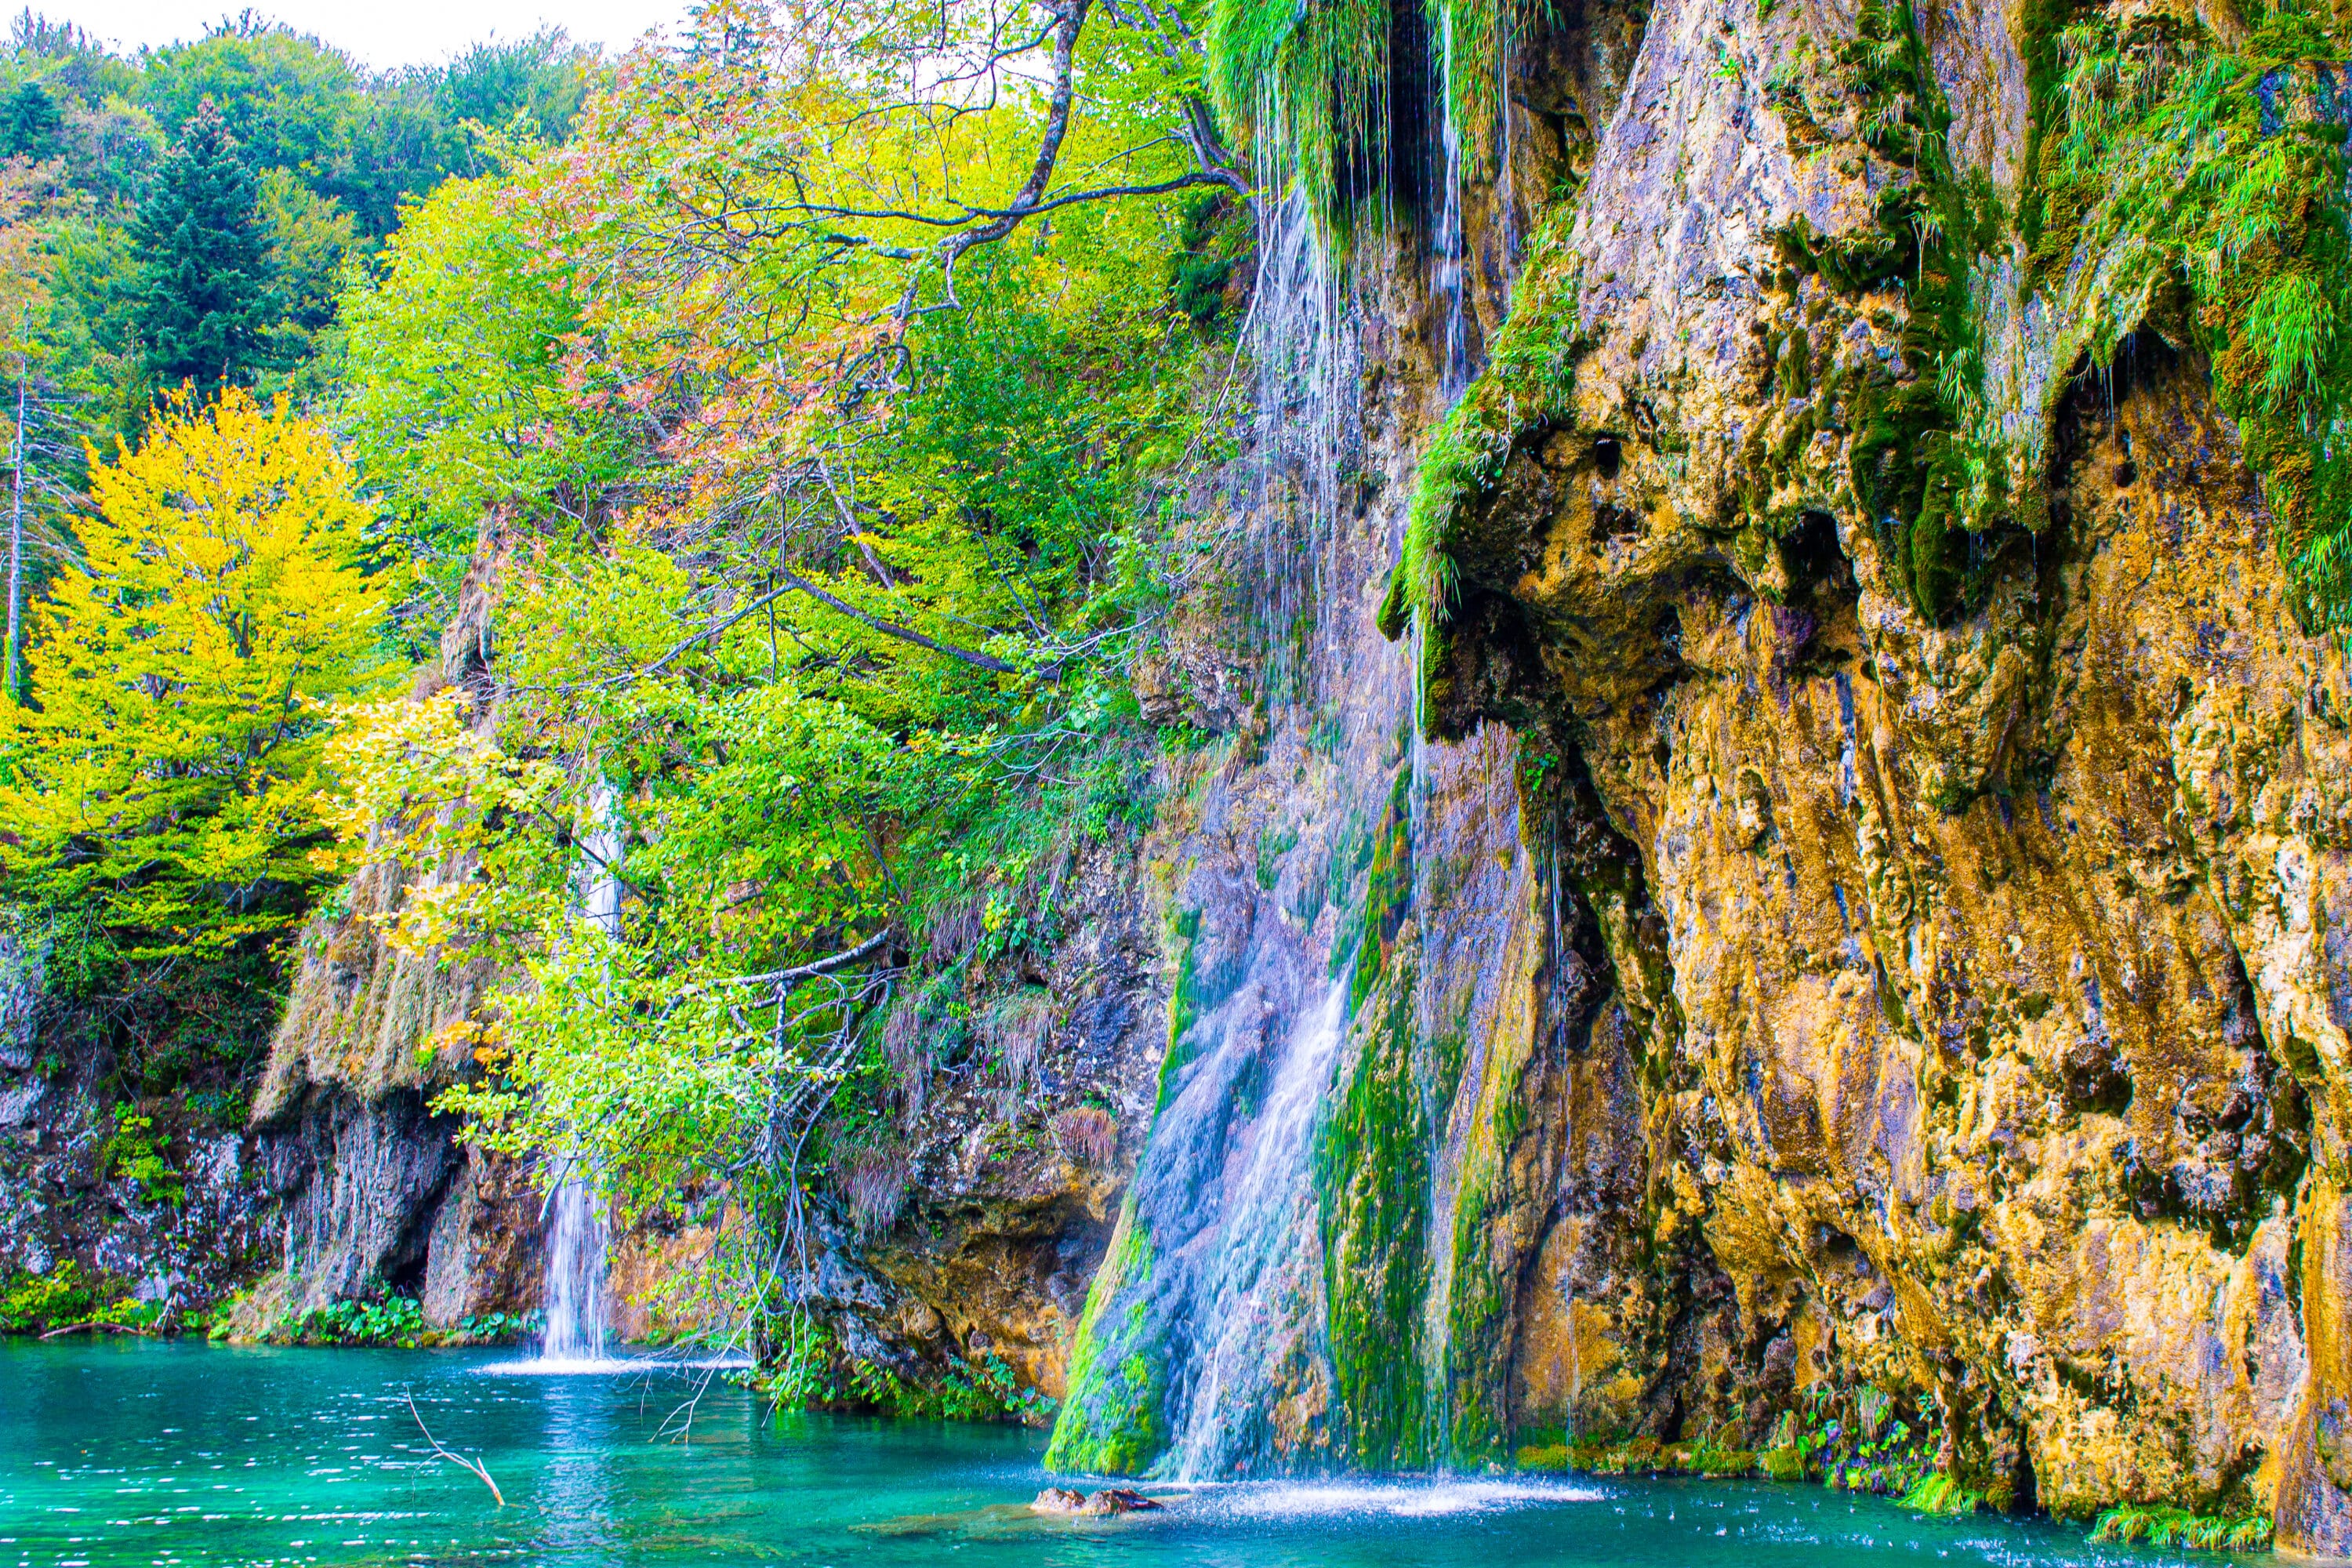 Travel Notes: Plitvice Lakes, Croatia